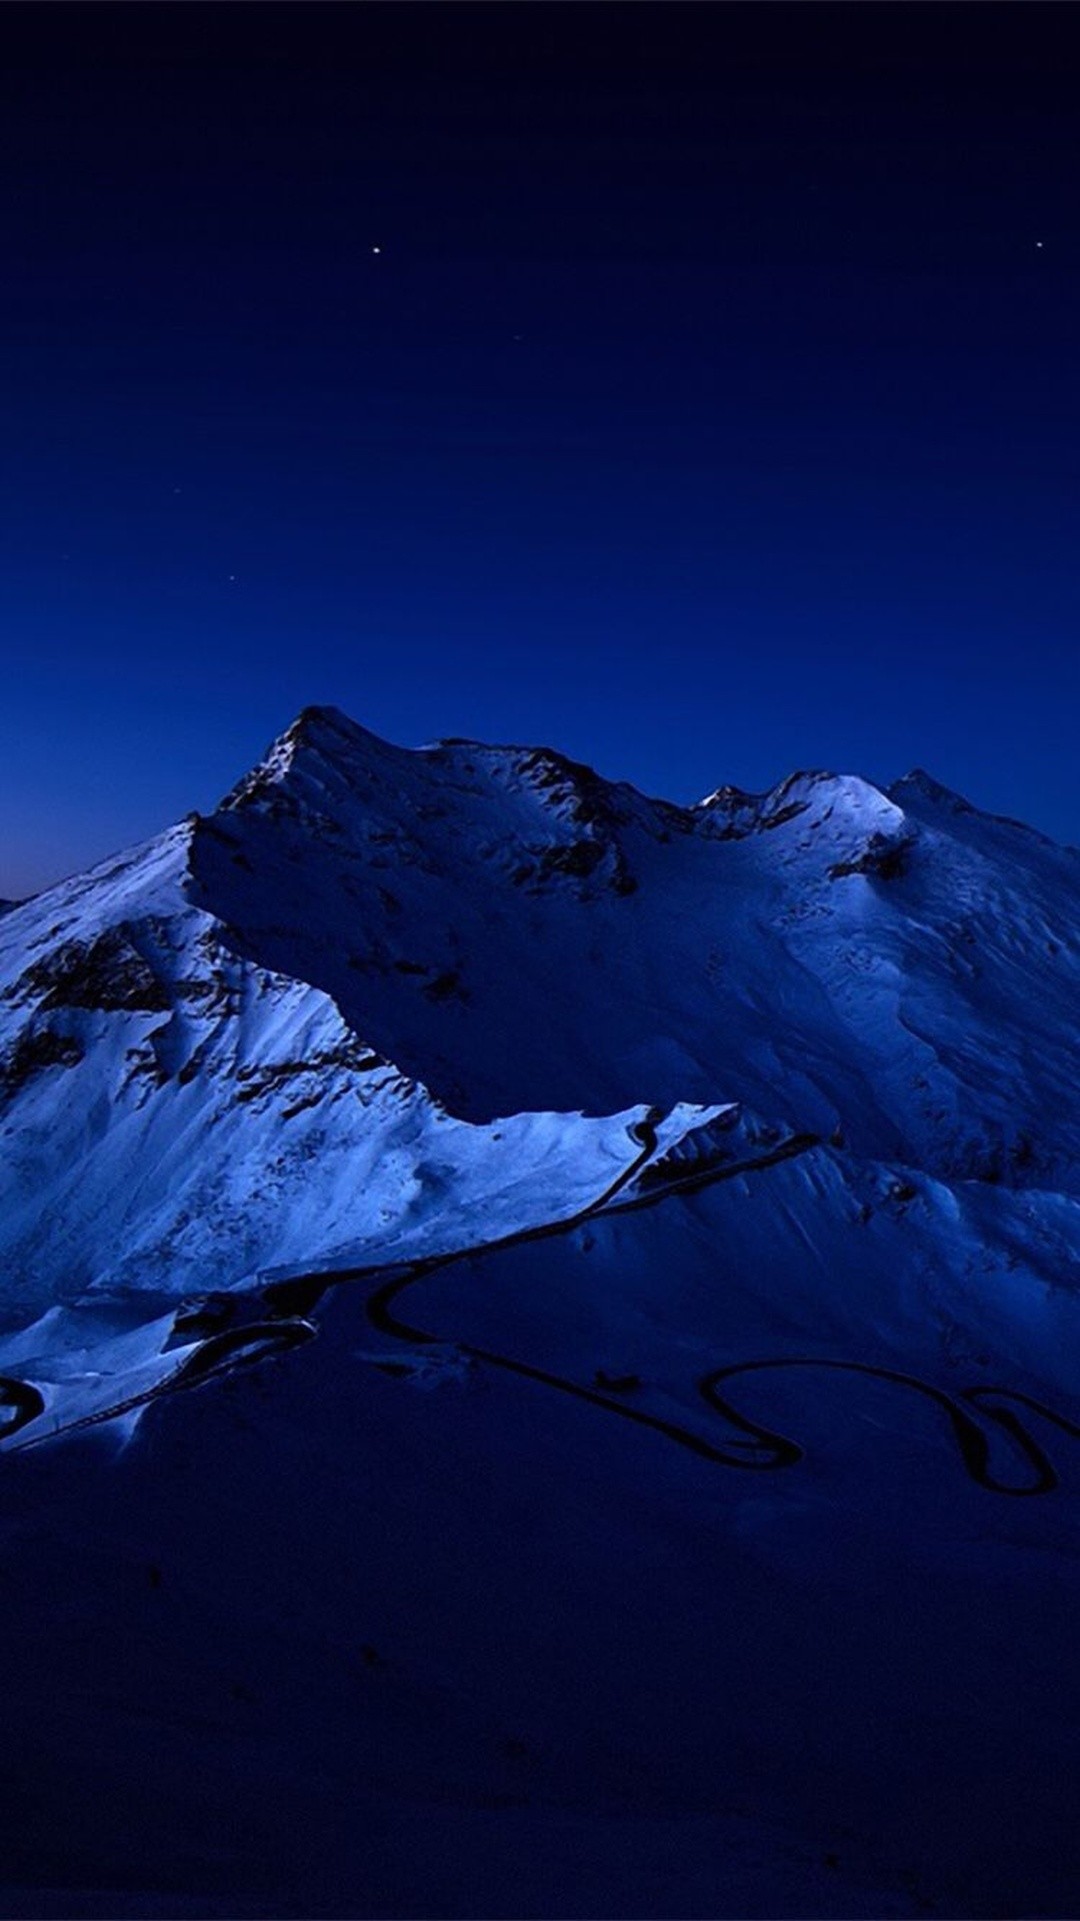 1080x1921 Night Sky Over Snow Mountain Peak iPhone 6 Plus HD Wallpaper